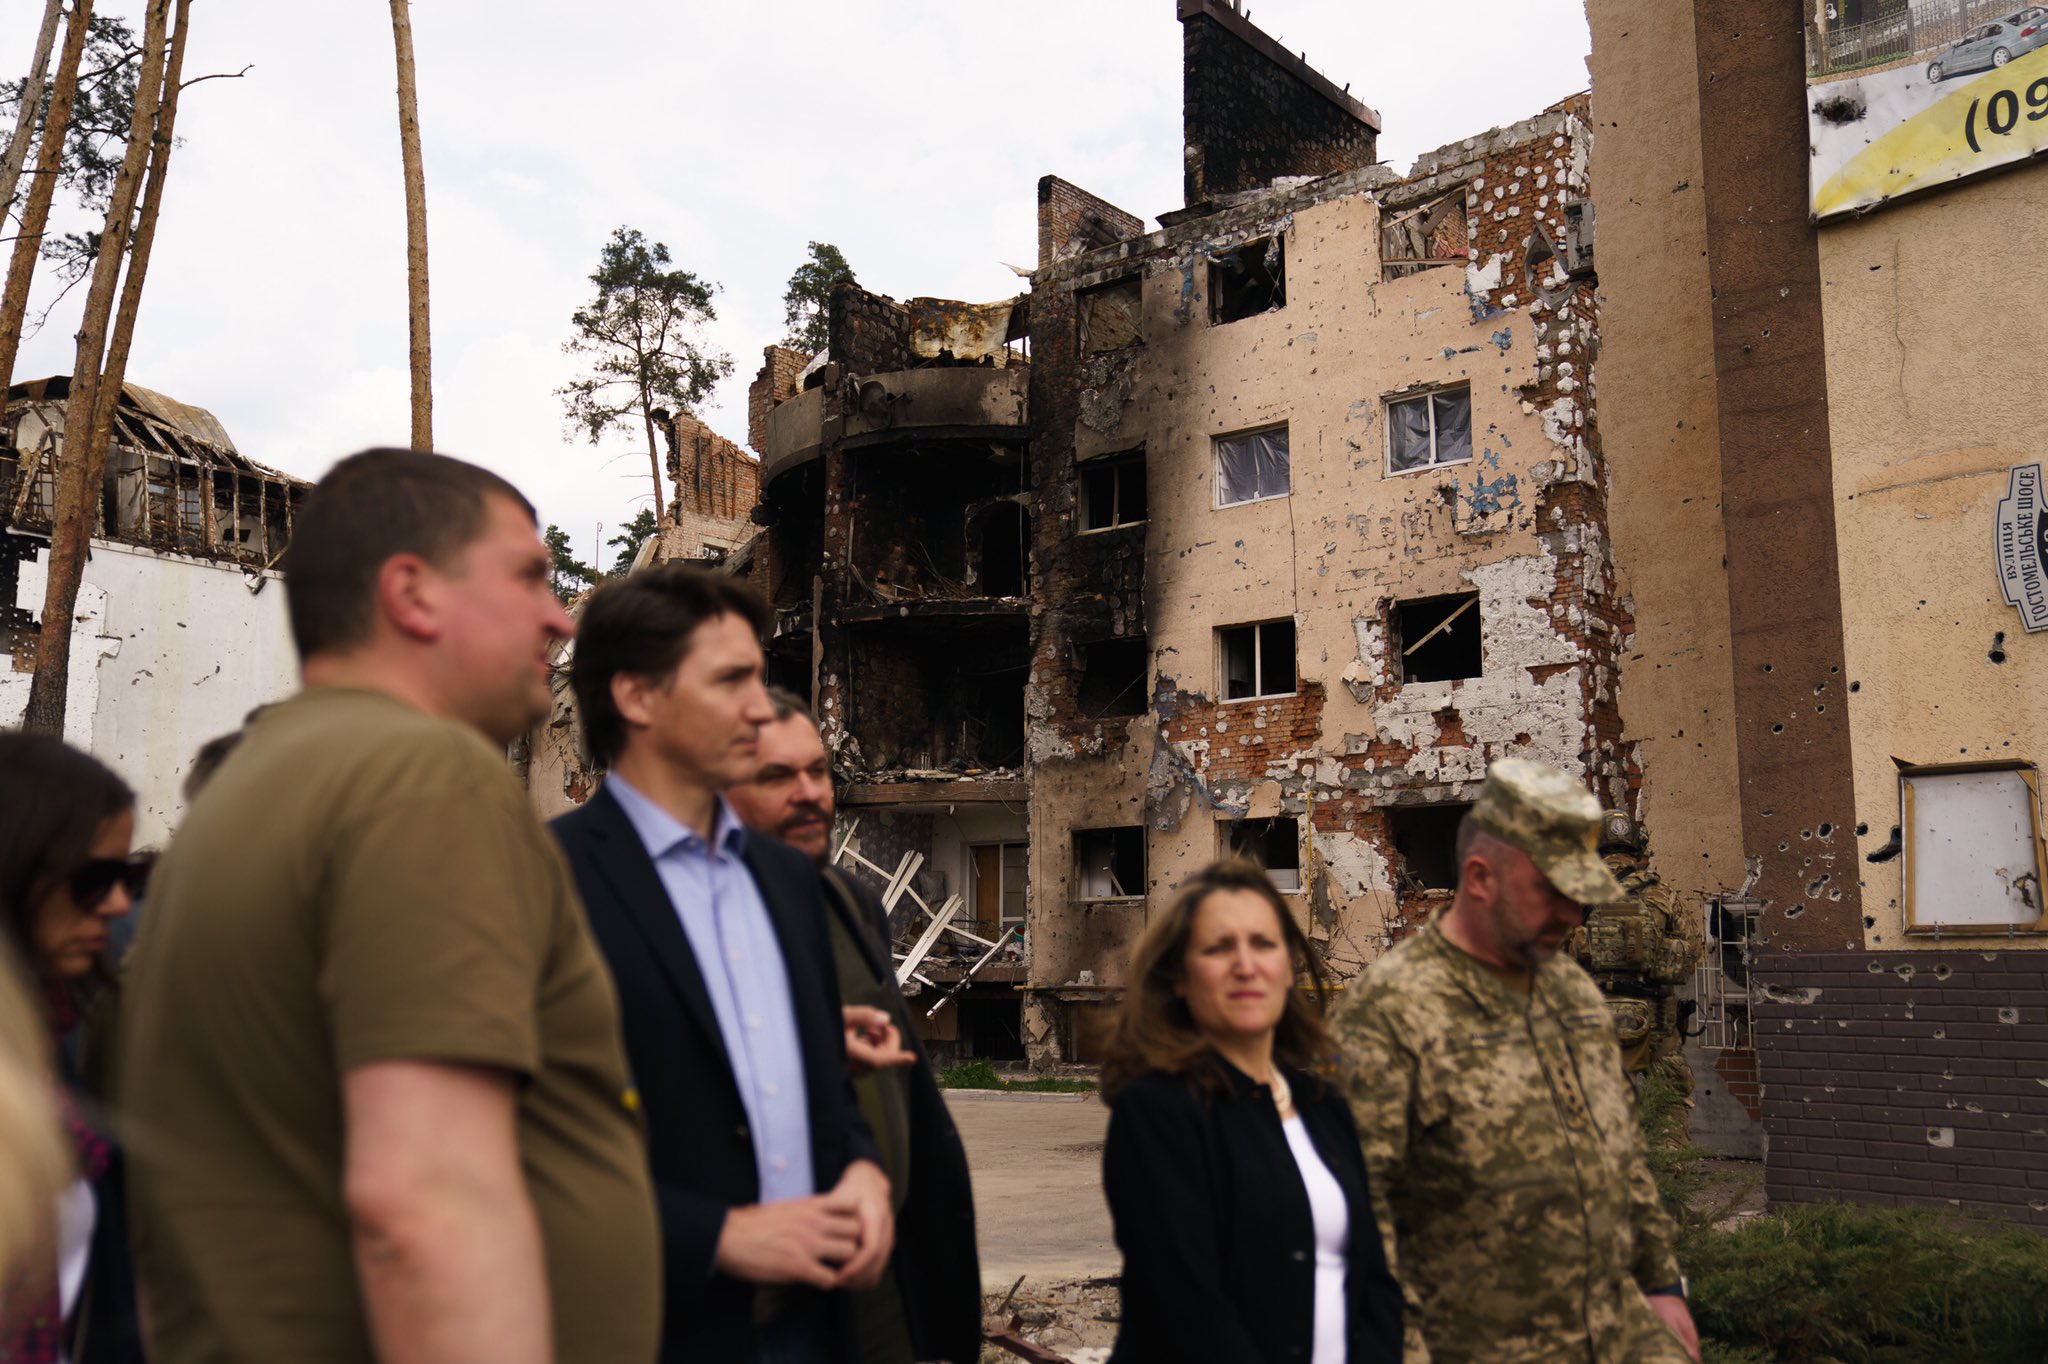 some of the destruction and devastation we witnessed in Ukraine.